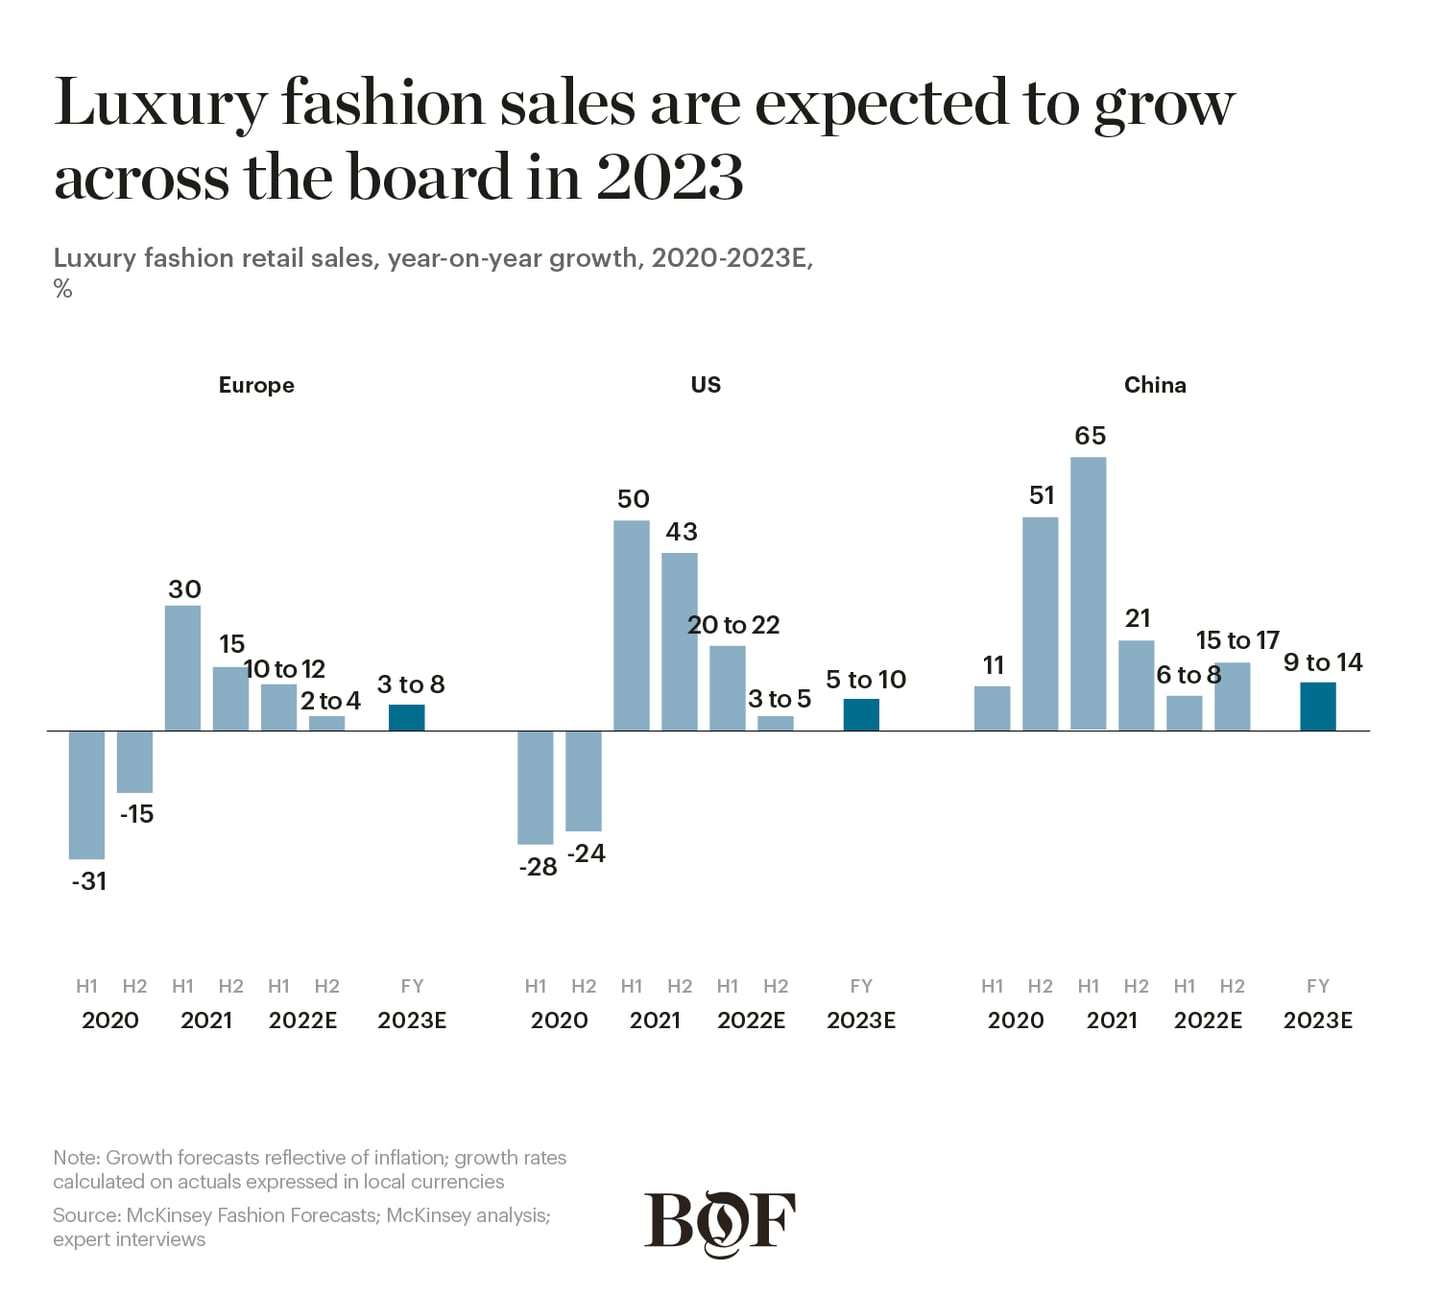 Luxury fashion sales 2020-2023